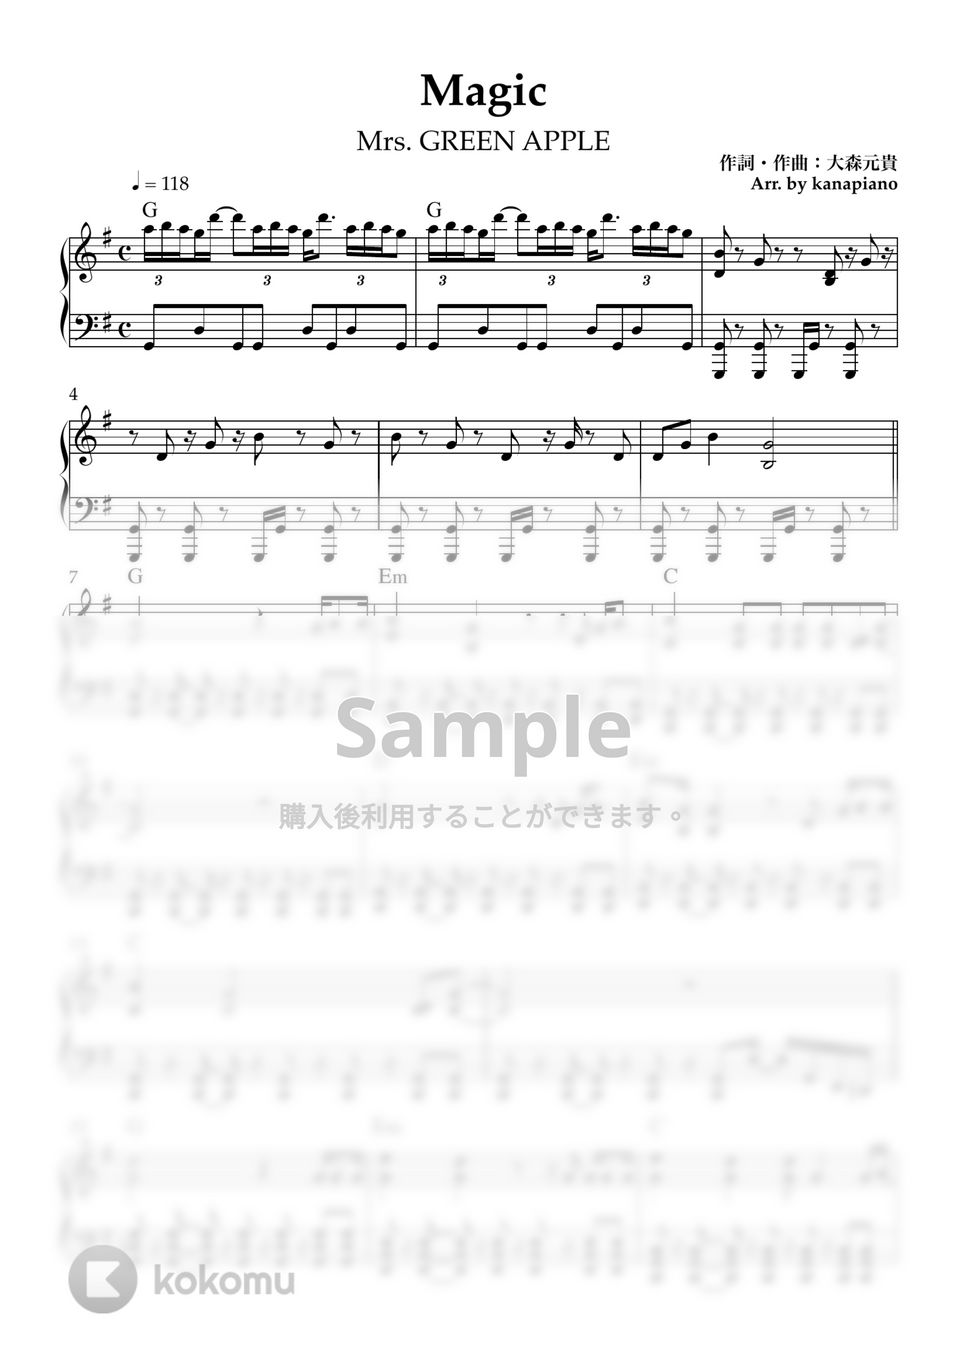 Mrs. GREEN APPLE - Magic (ピアノソロ) by kanapiano